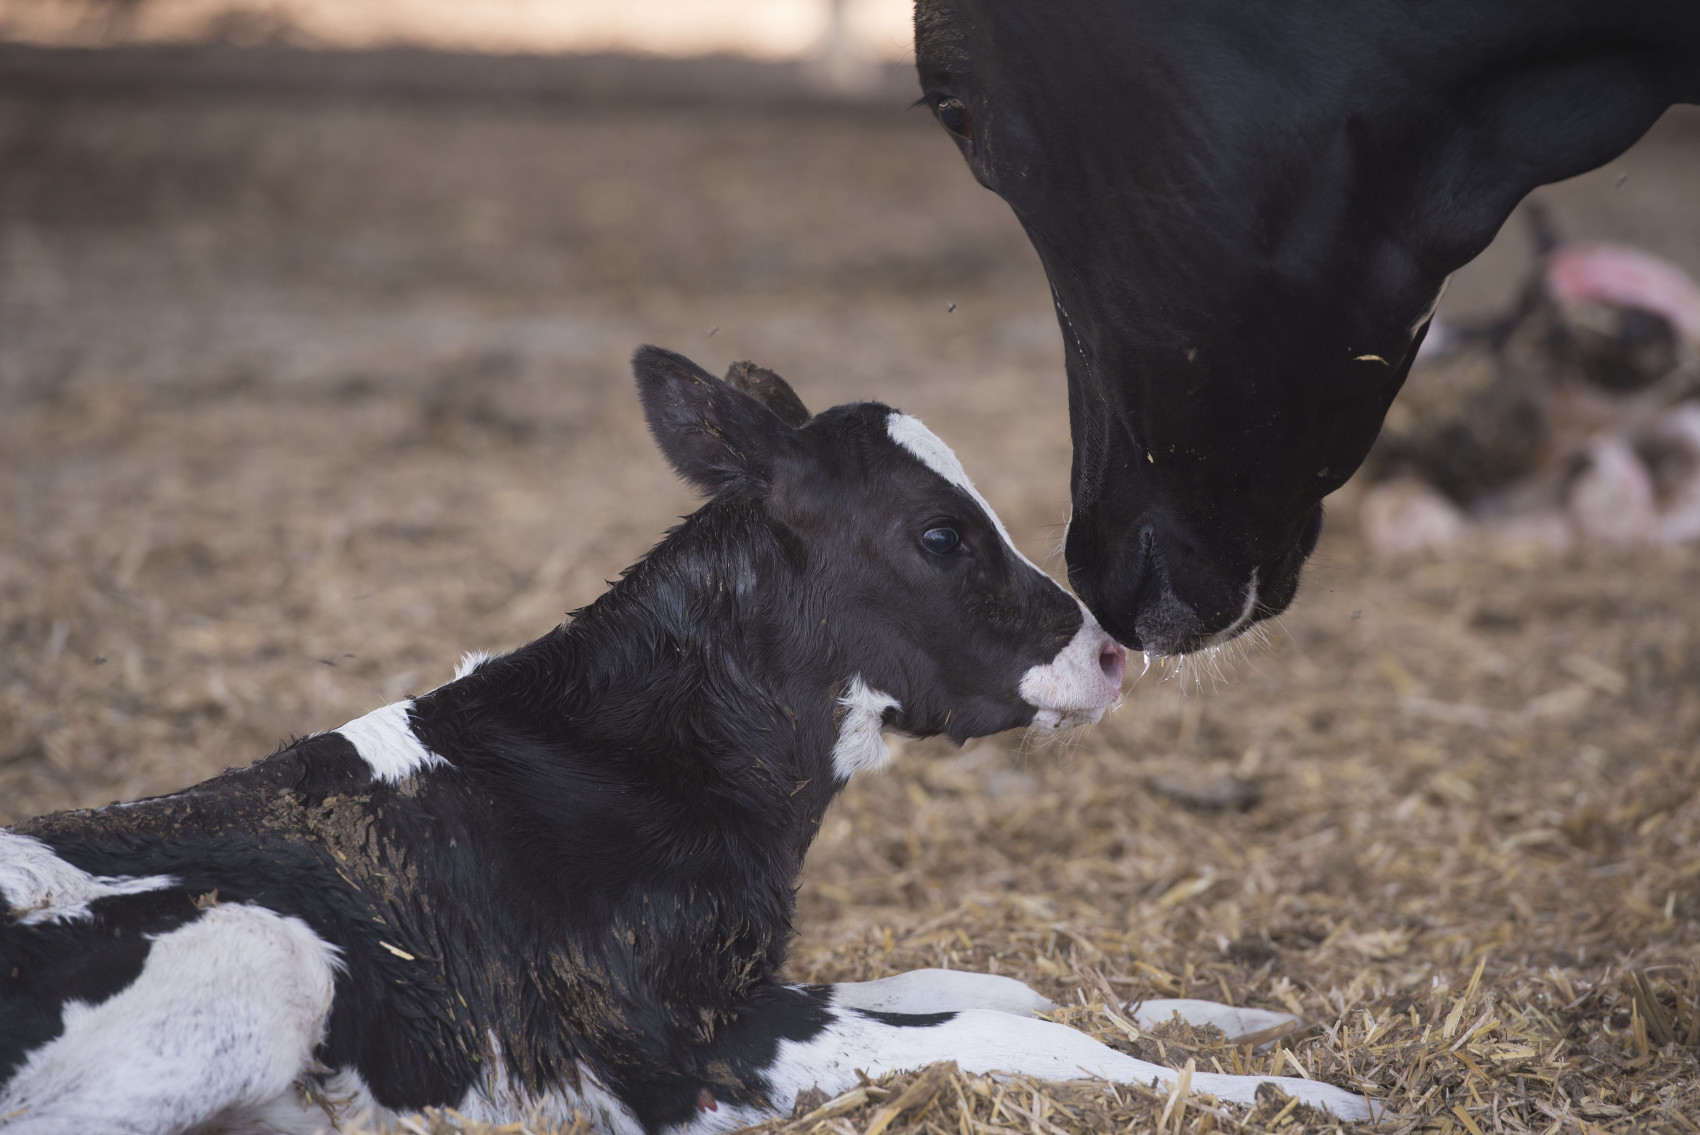 Sire calving ease increases through selection and breeding